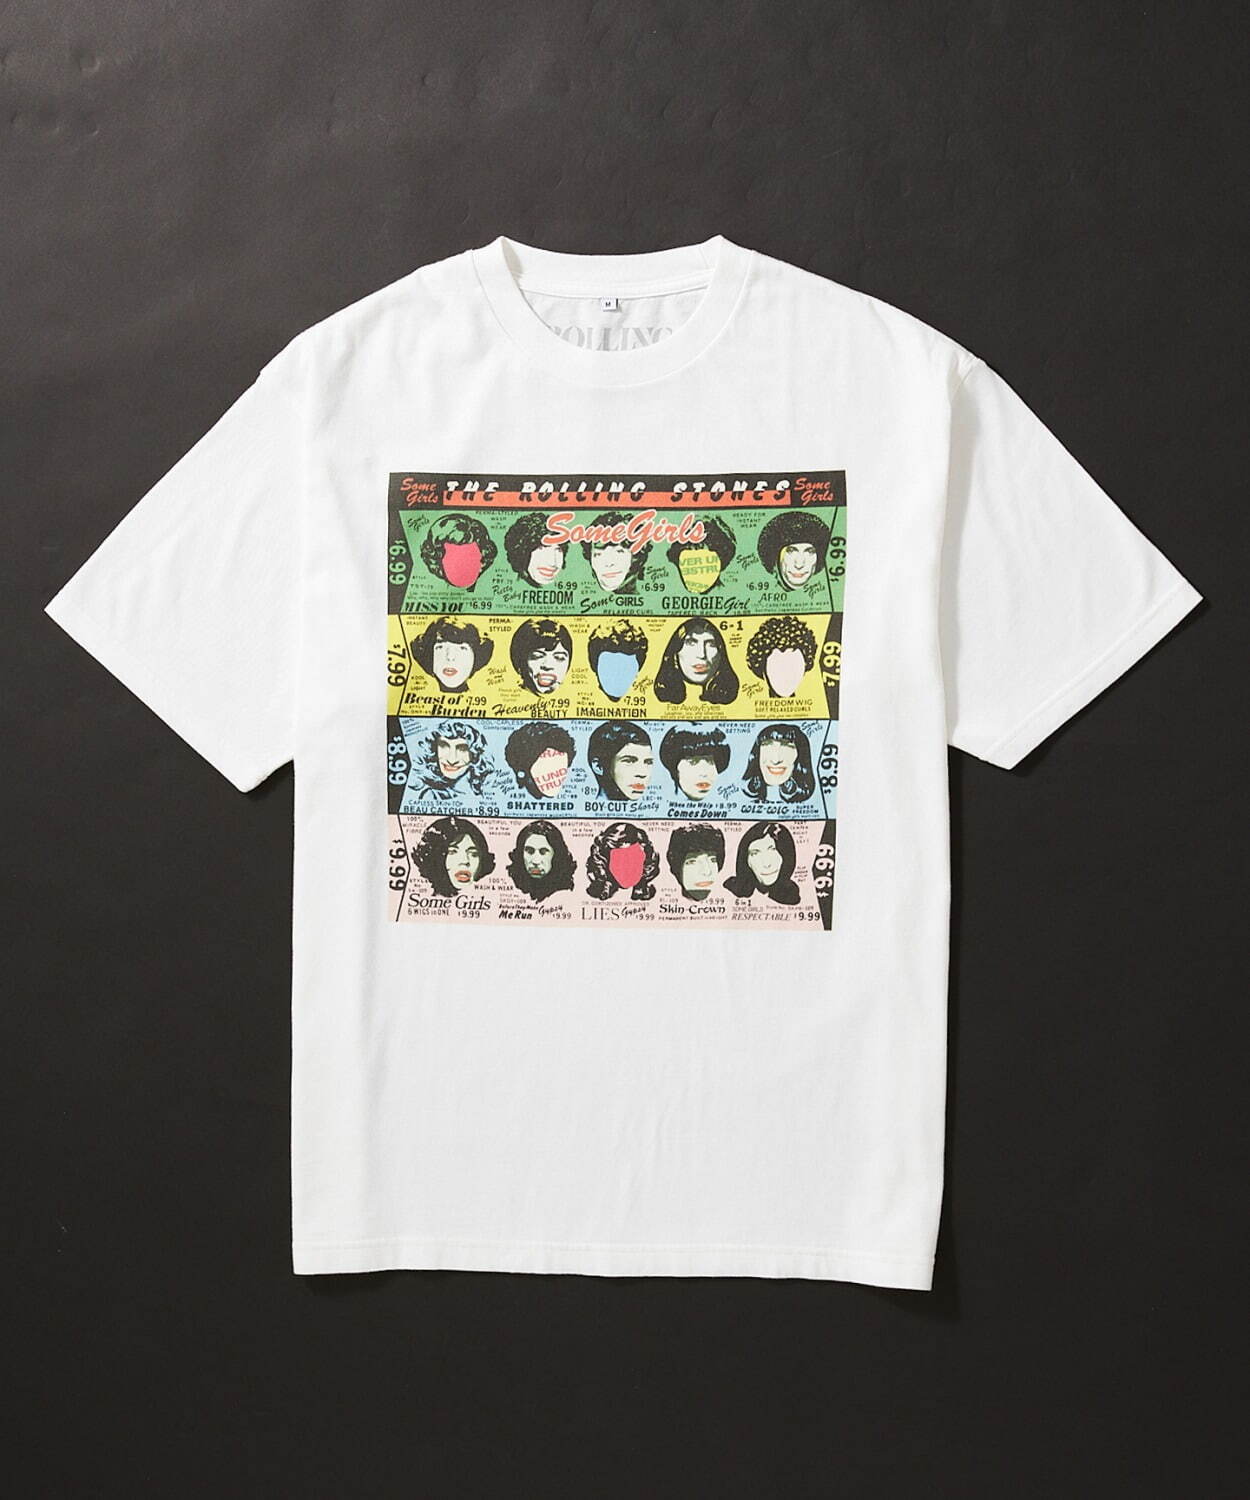 Tシャツ(M、L) 各6,930円